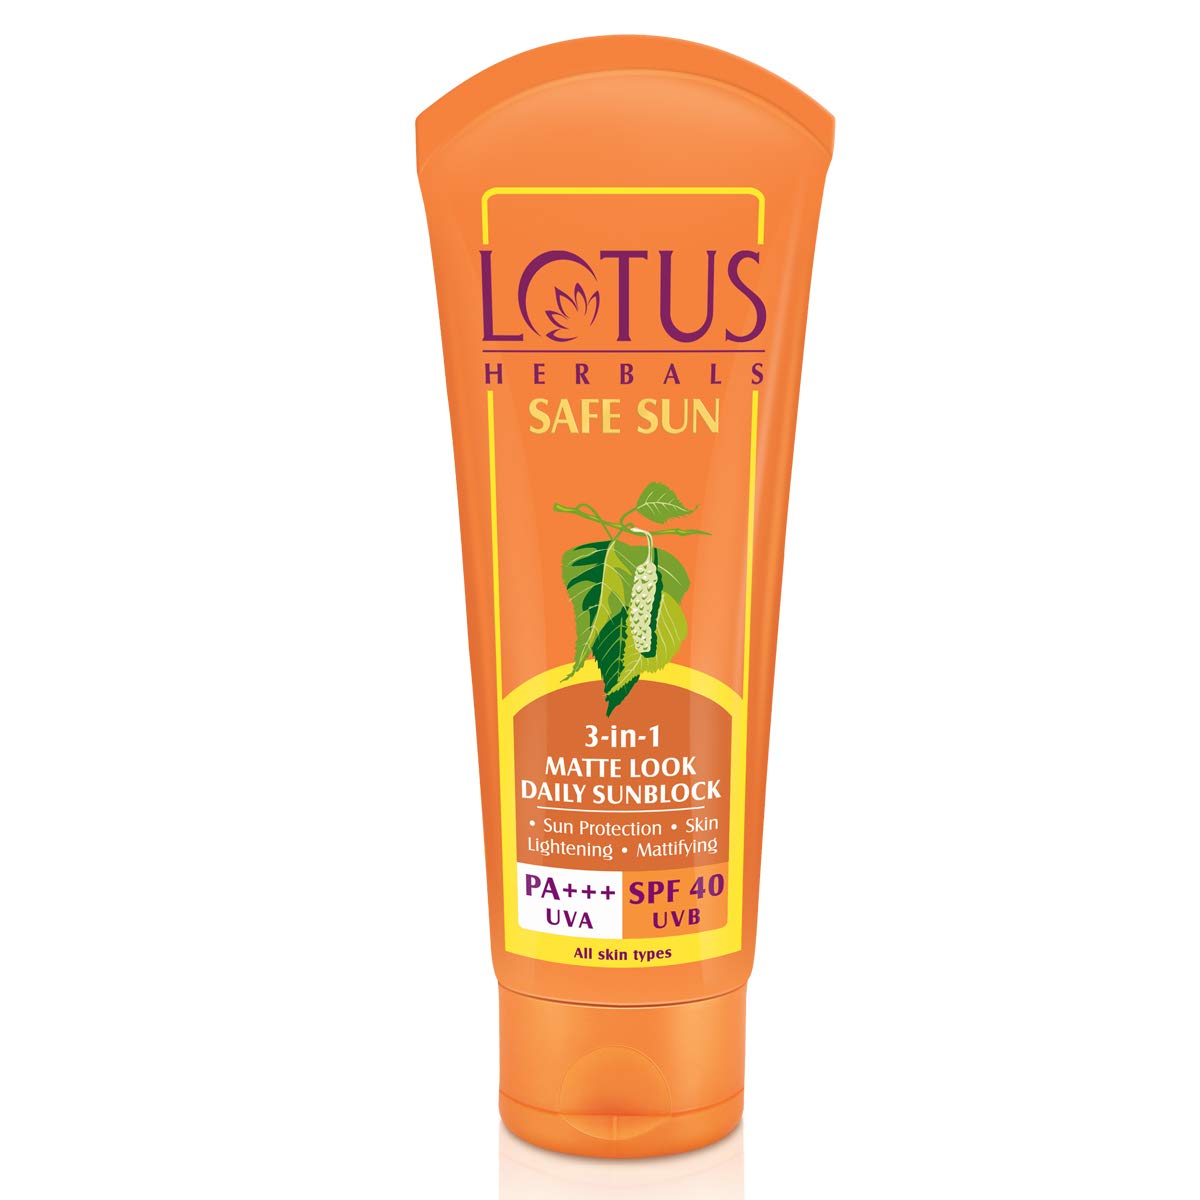 kem chống nắng cho ngày mưa Lotus Herbals Safe Sun 3-in-1 Matte-Look Daily Sunblock Pa +++ SPF-40